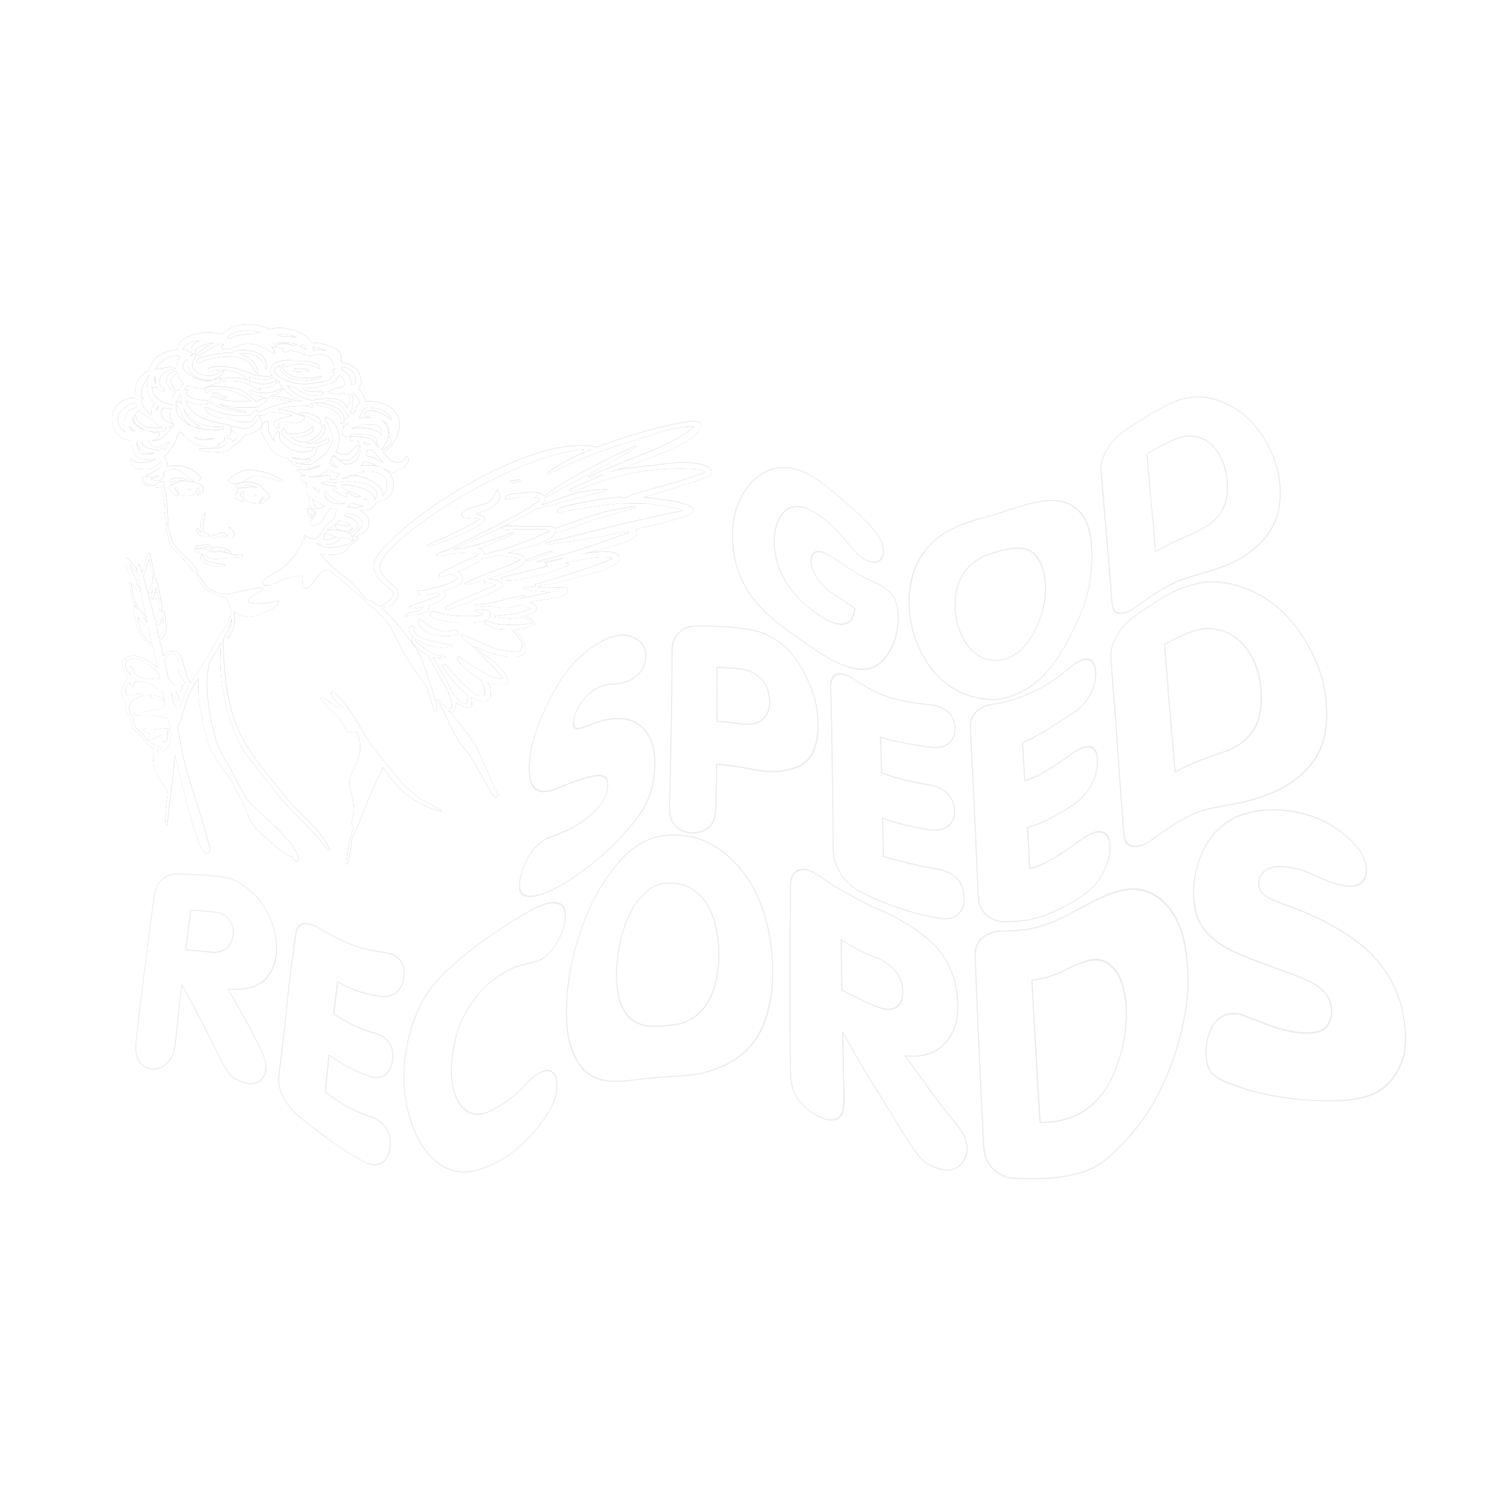 God Speed Records